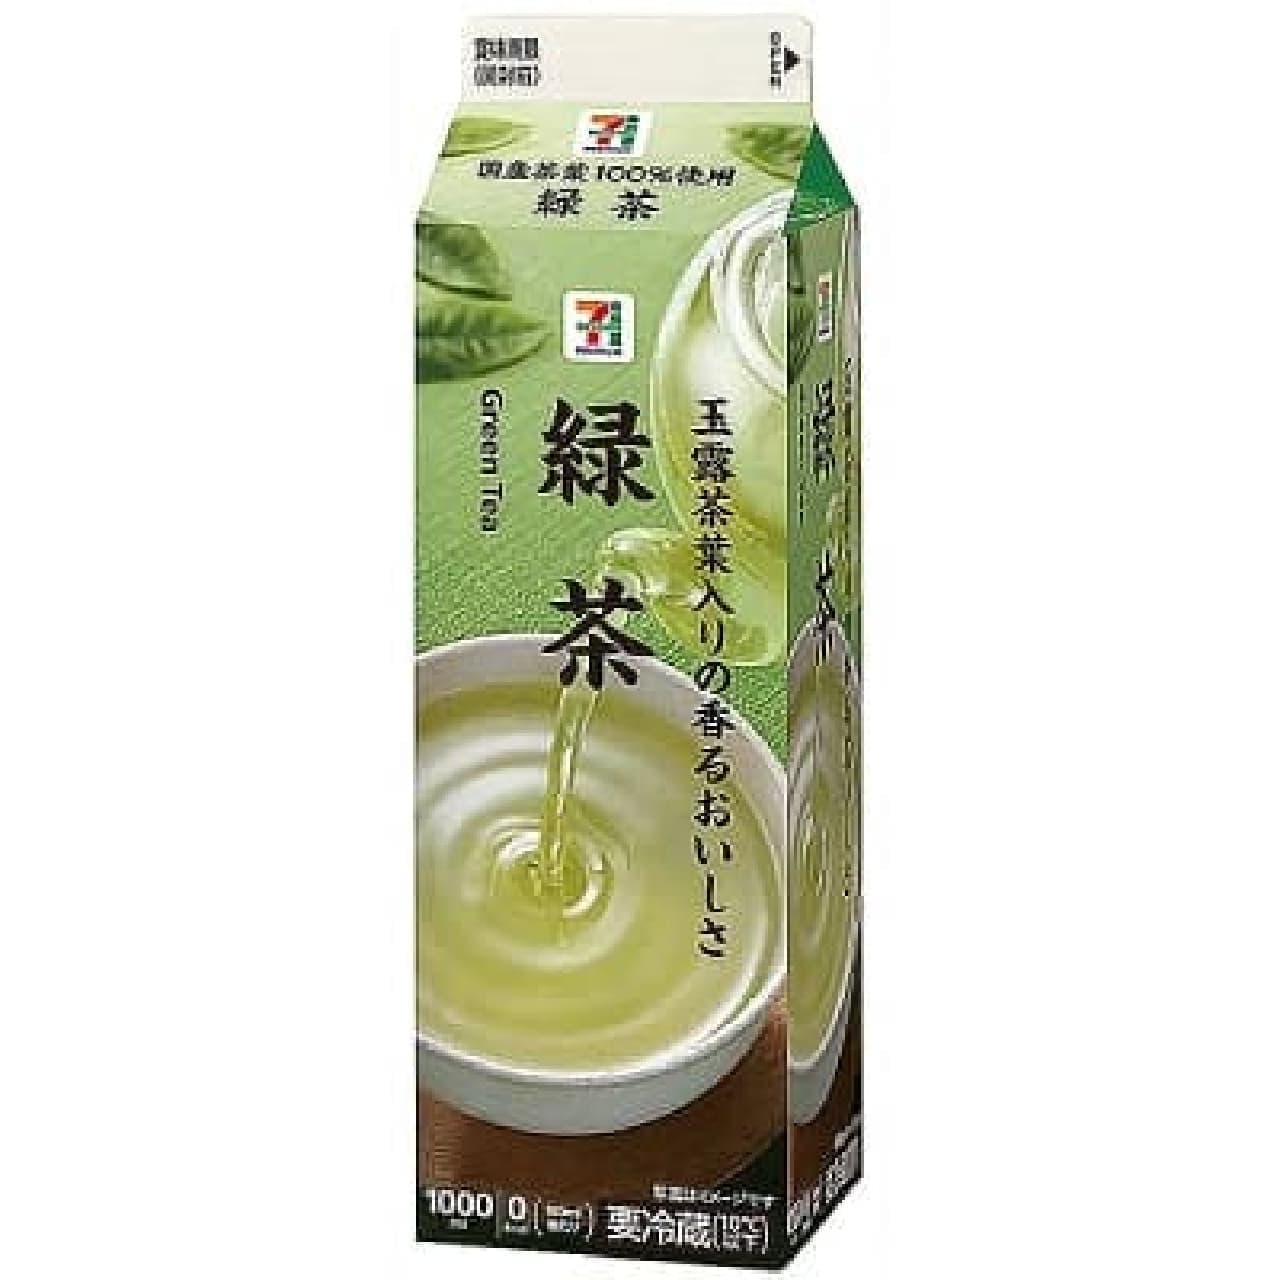 7-ELEVEN Green tea 1000ml